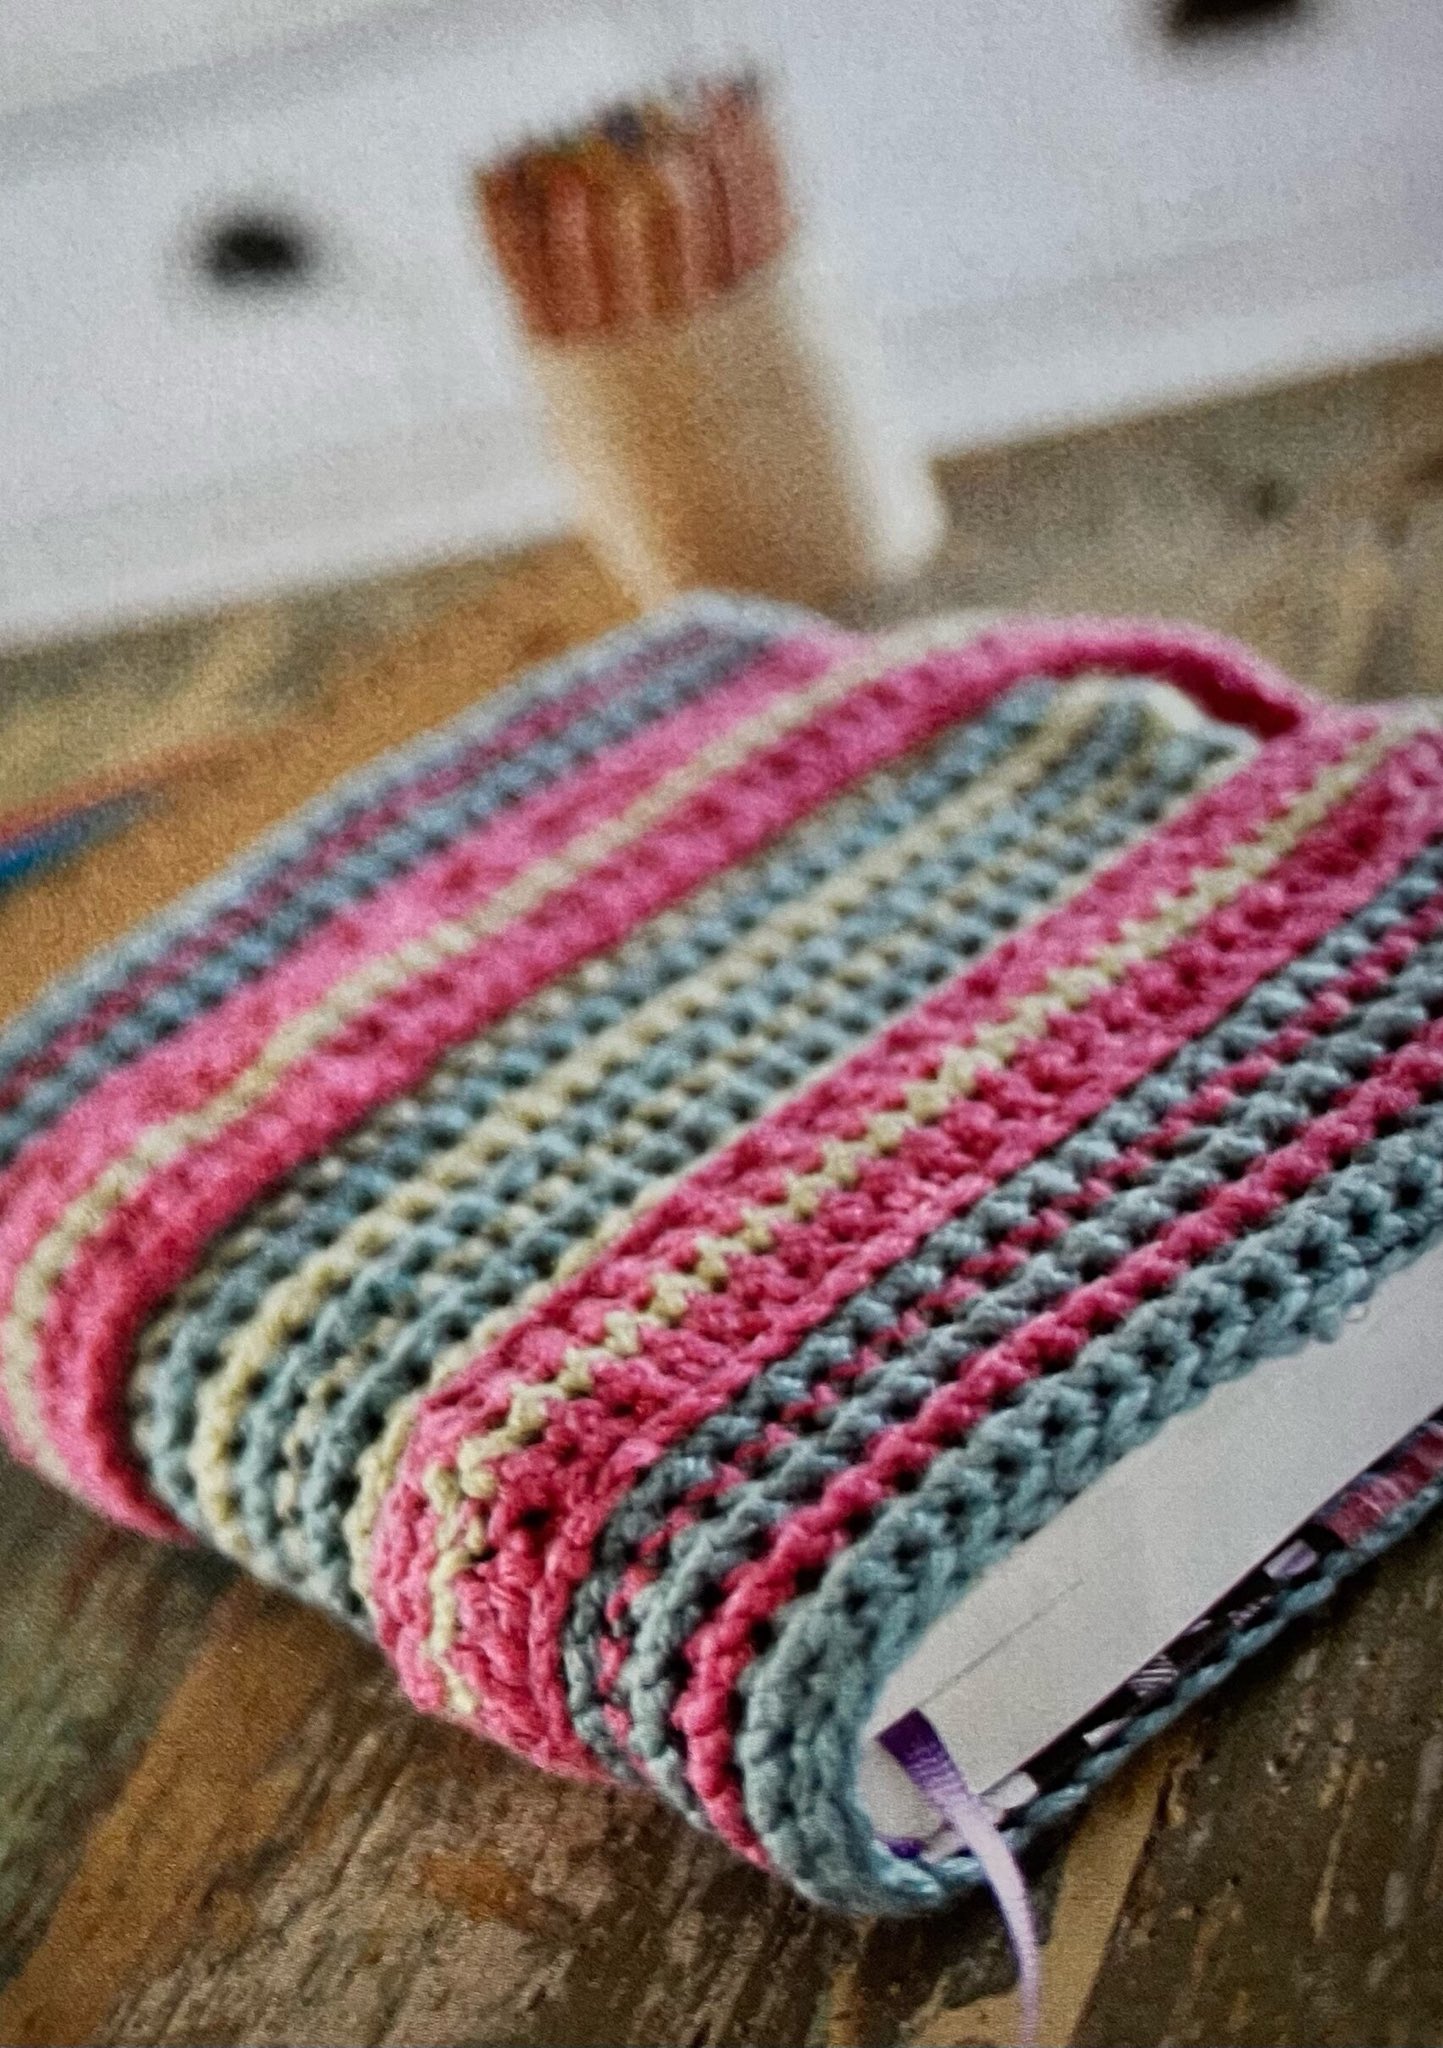 star granny square book sleeve: Crochet pattern